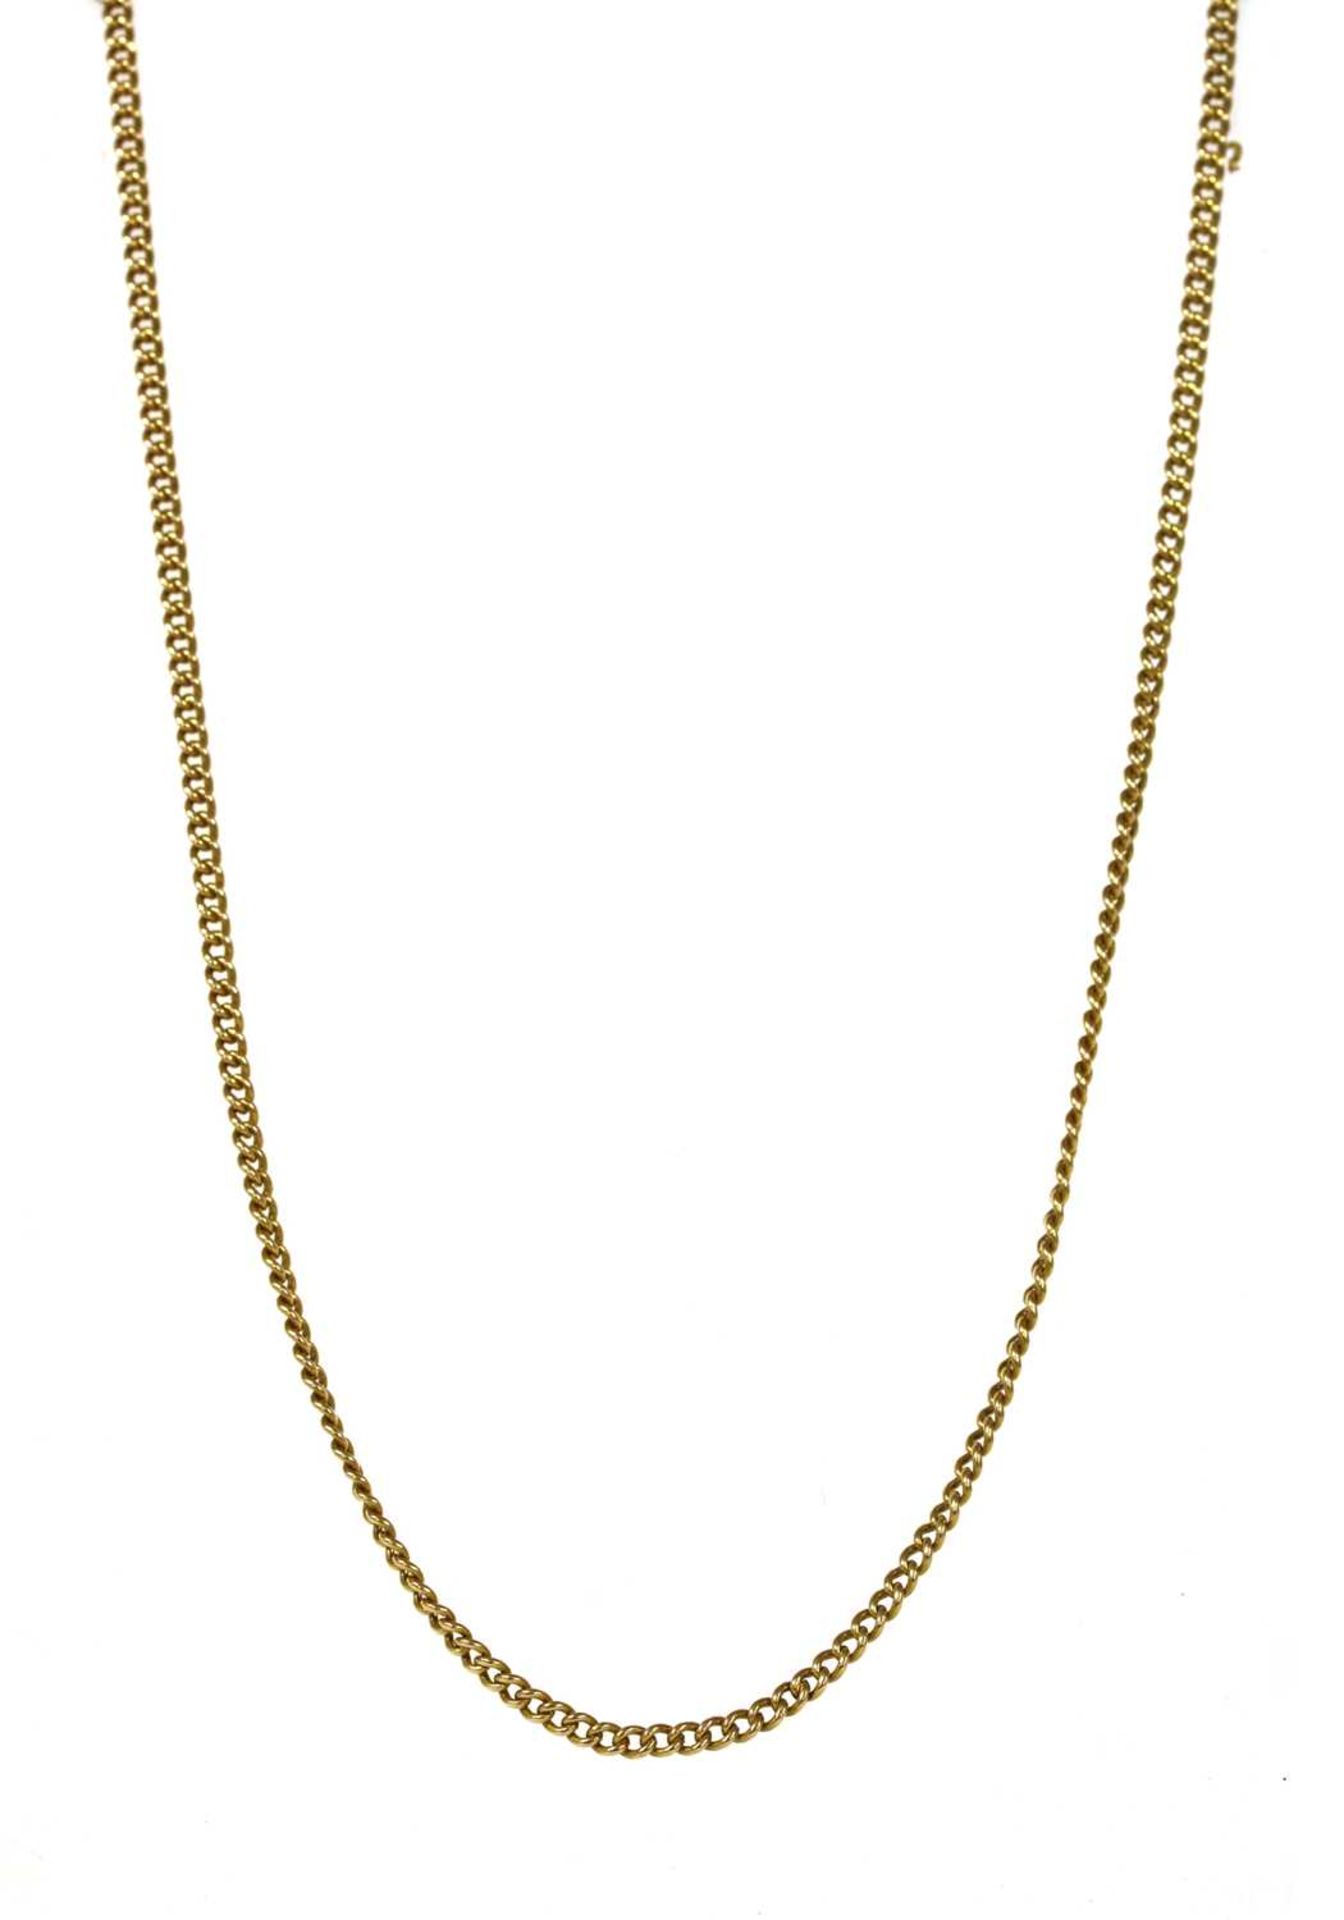 A gold curb link chain,